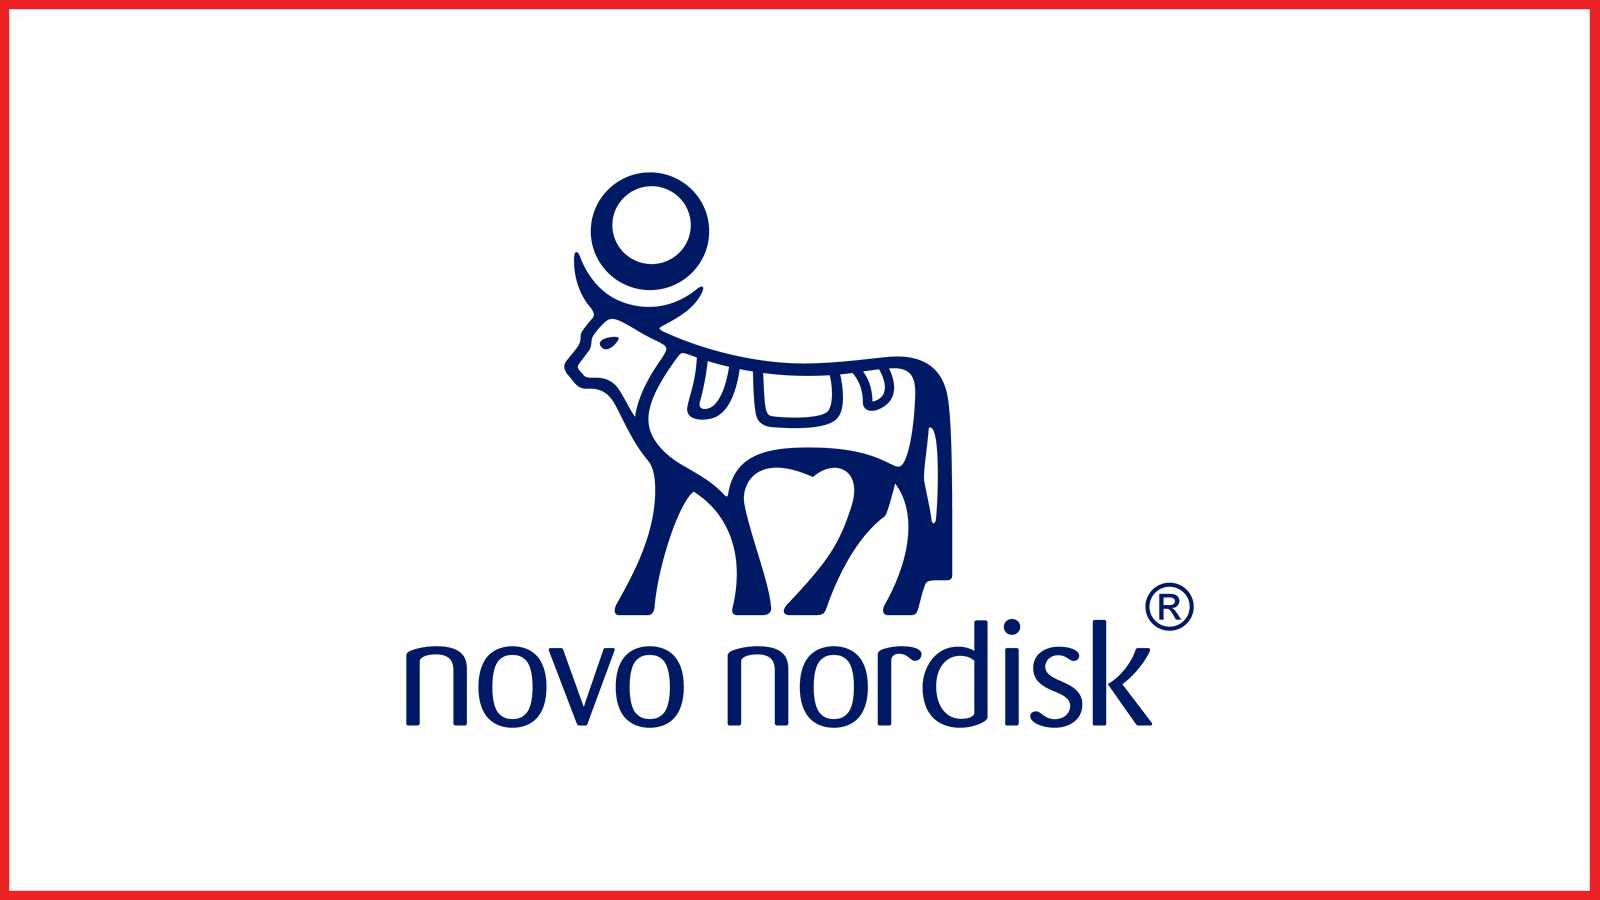 novo nordisk logo with red border